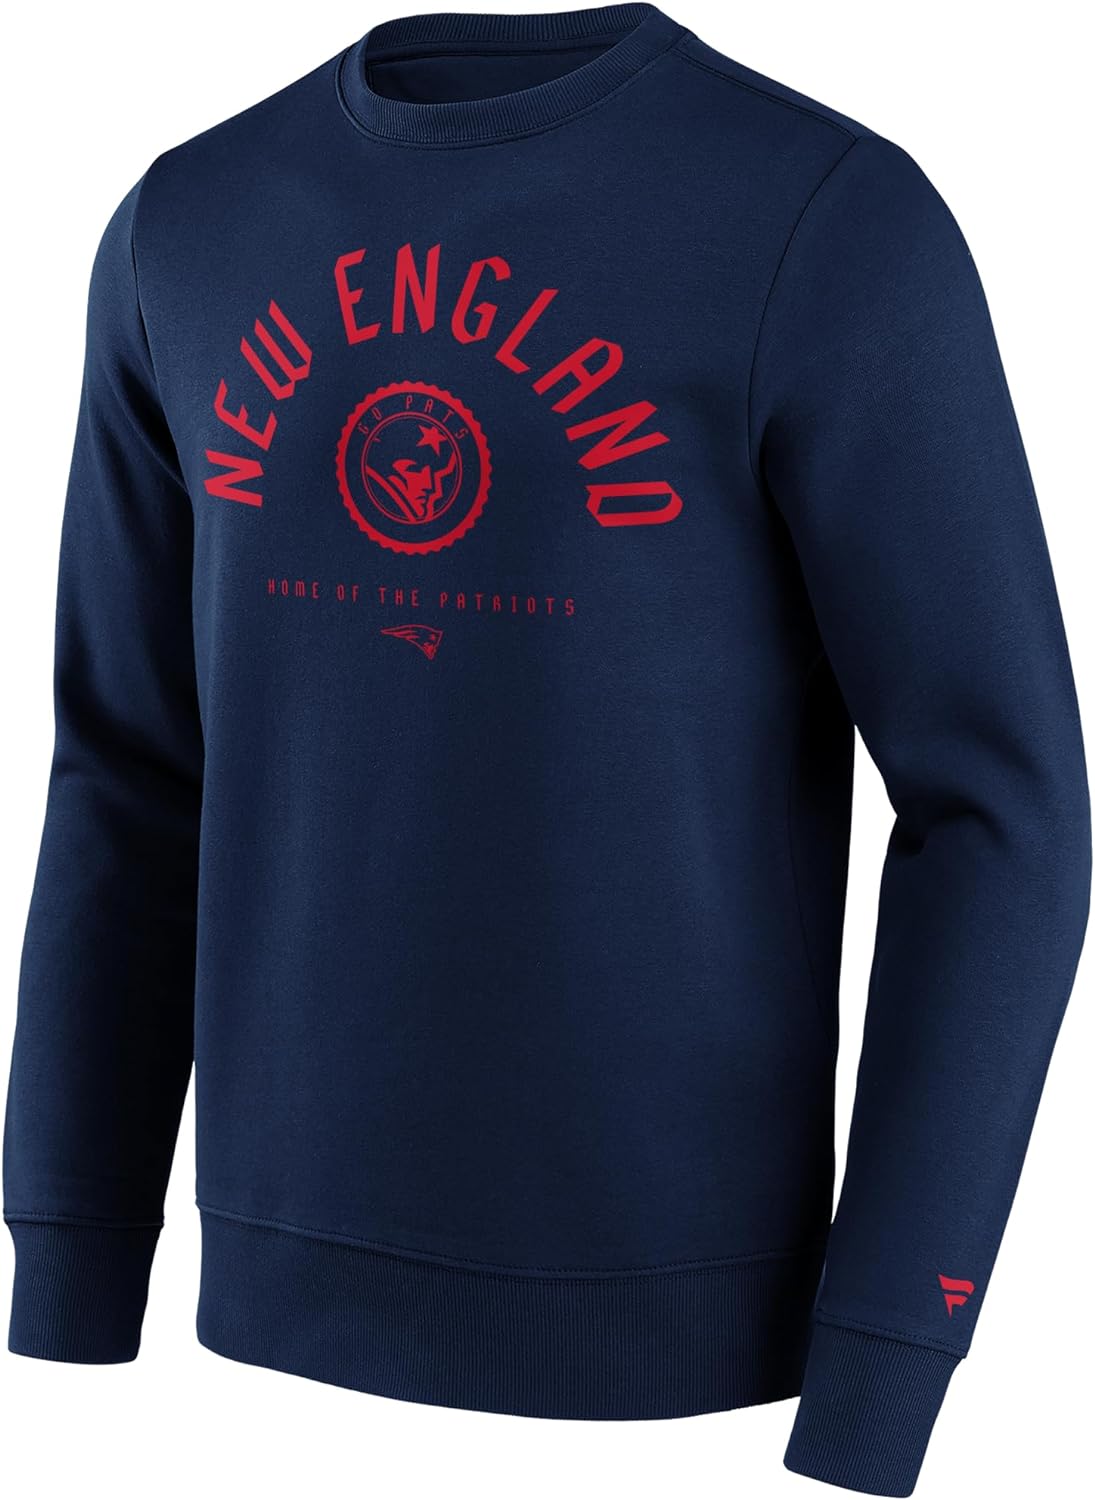 New England Patriots College Stamp Crew Sweatshirt